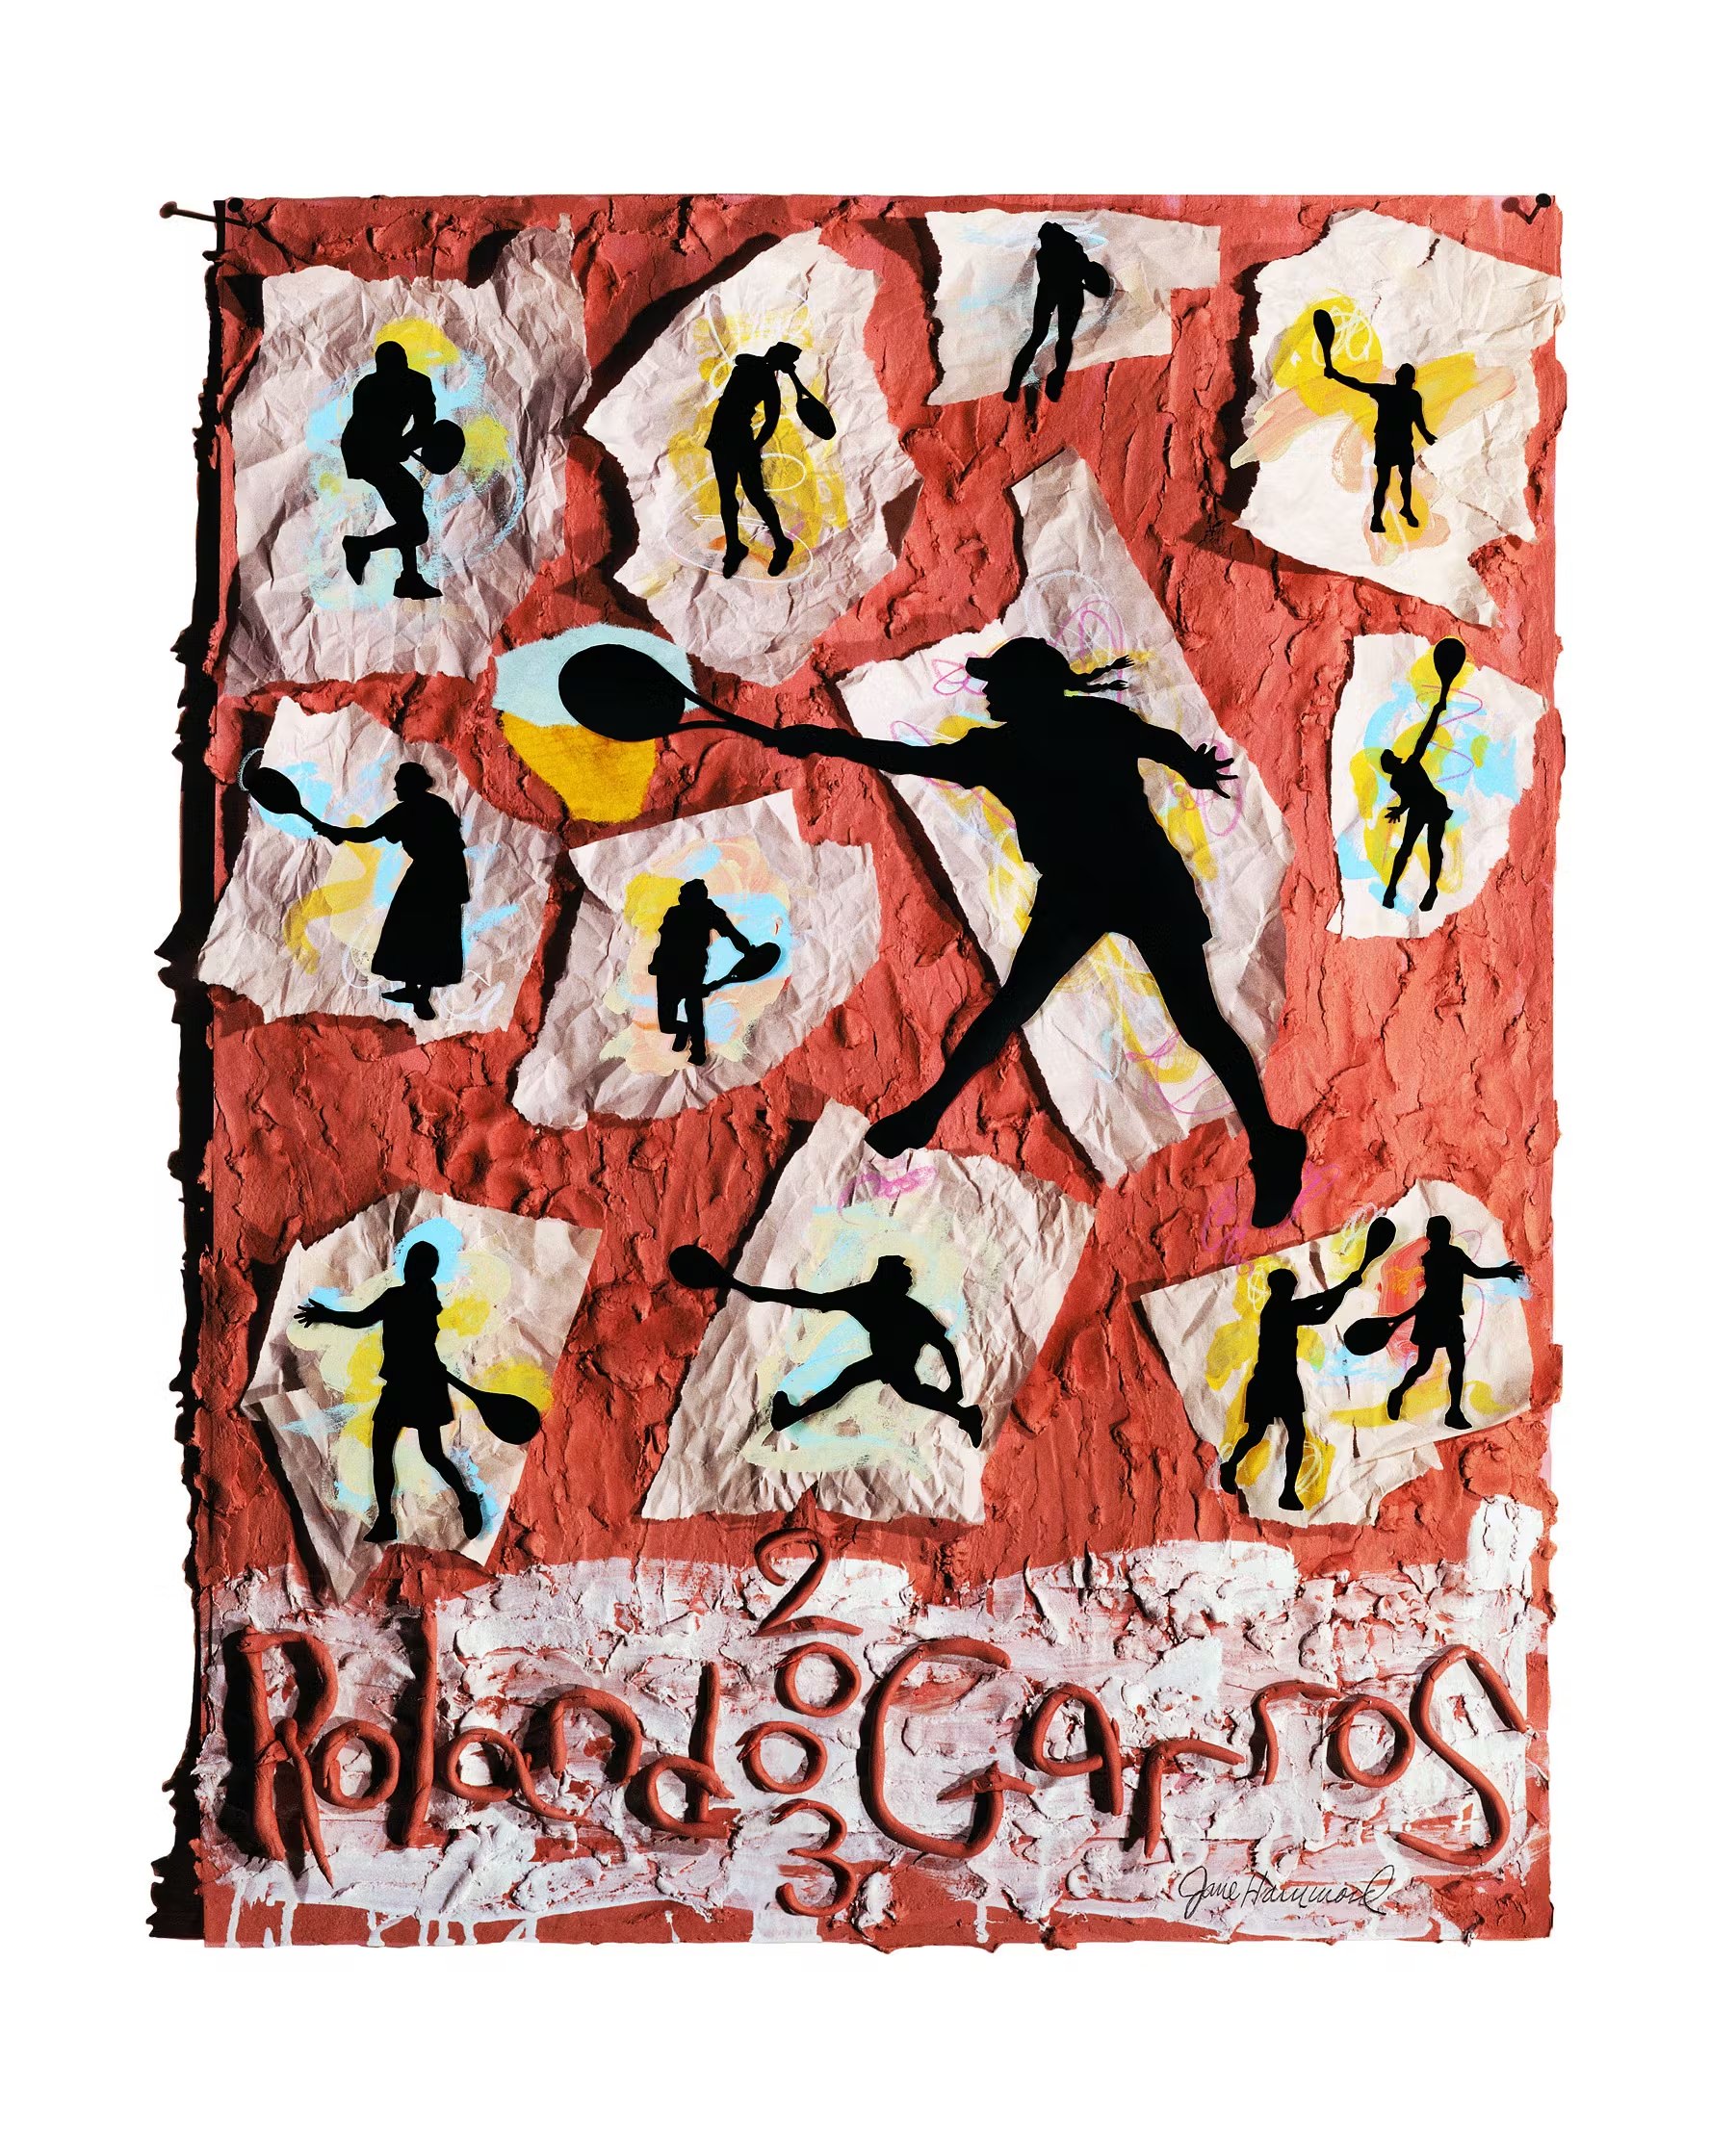 Roland Garros 2003 poster